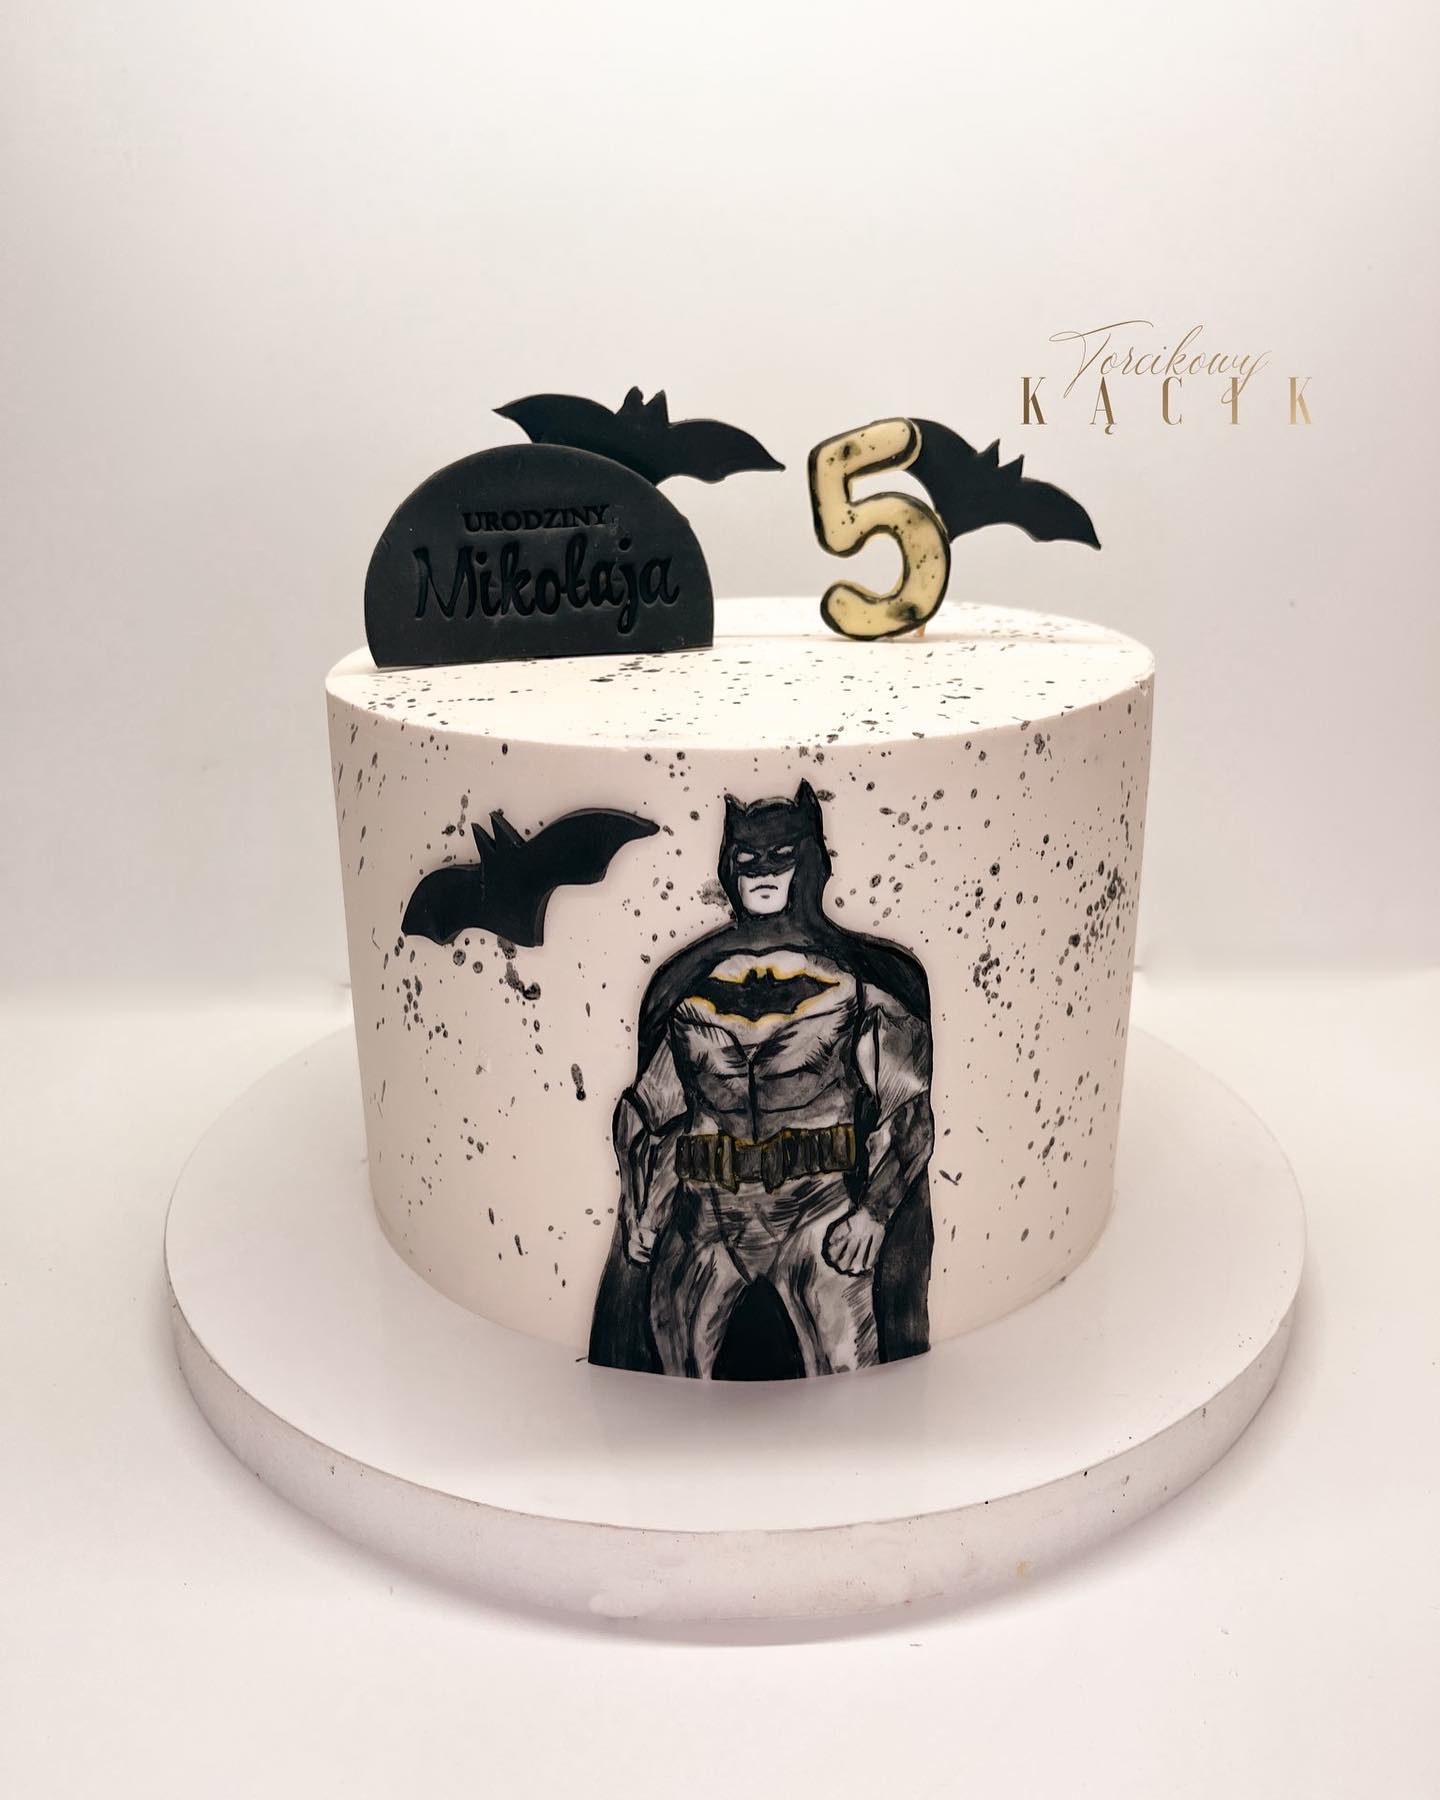 batman happy birthday cake